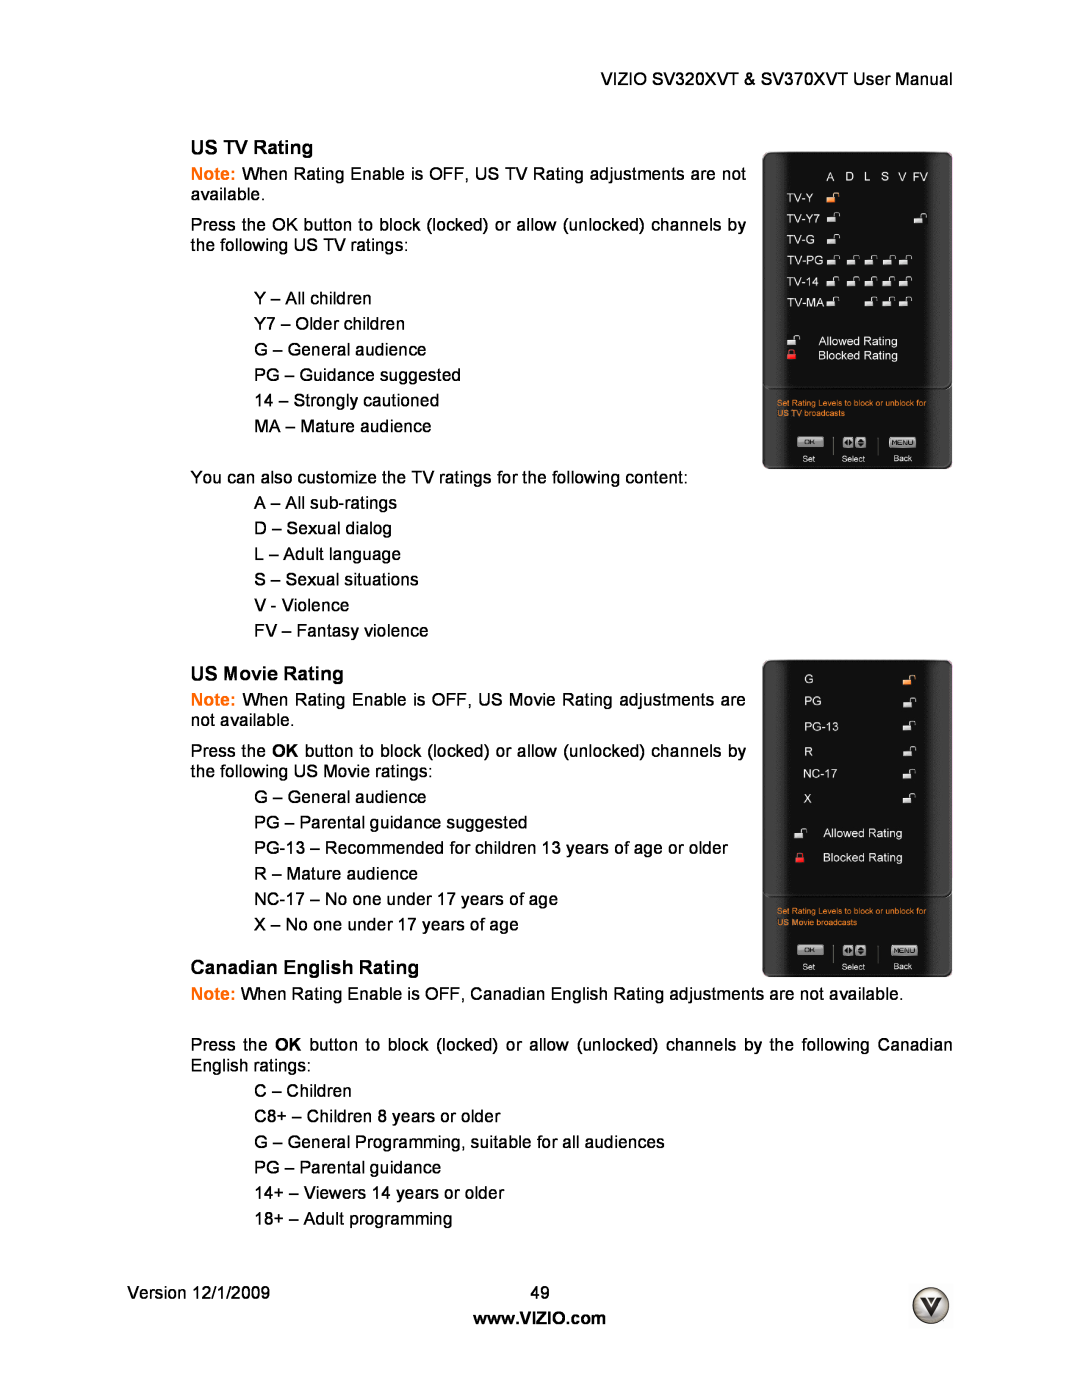 Vizio SV370XVT, SV320XVT user manual US TV Rating, US Movie Rating, Canadian English Rating 